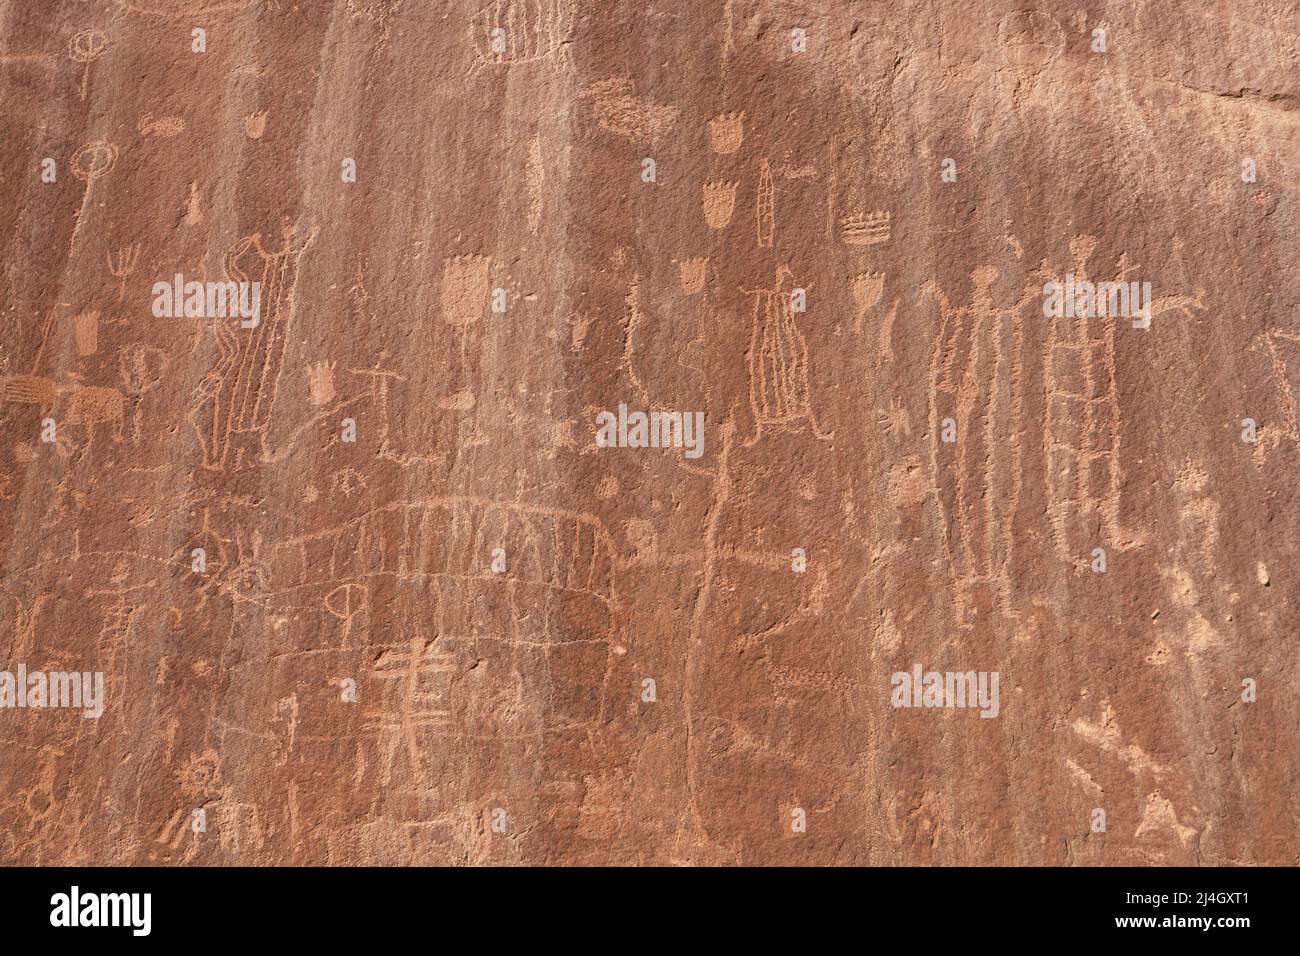 Petroglyph rock art on sandstone cliffs near Neon Canyon, Glen Canyon National Recreation Area, Garfield County, Utah, USA Stock Photo